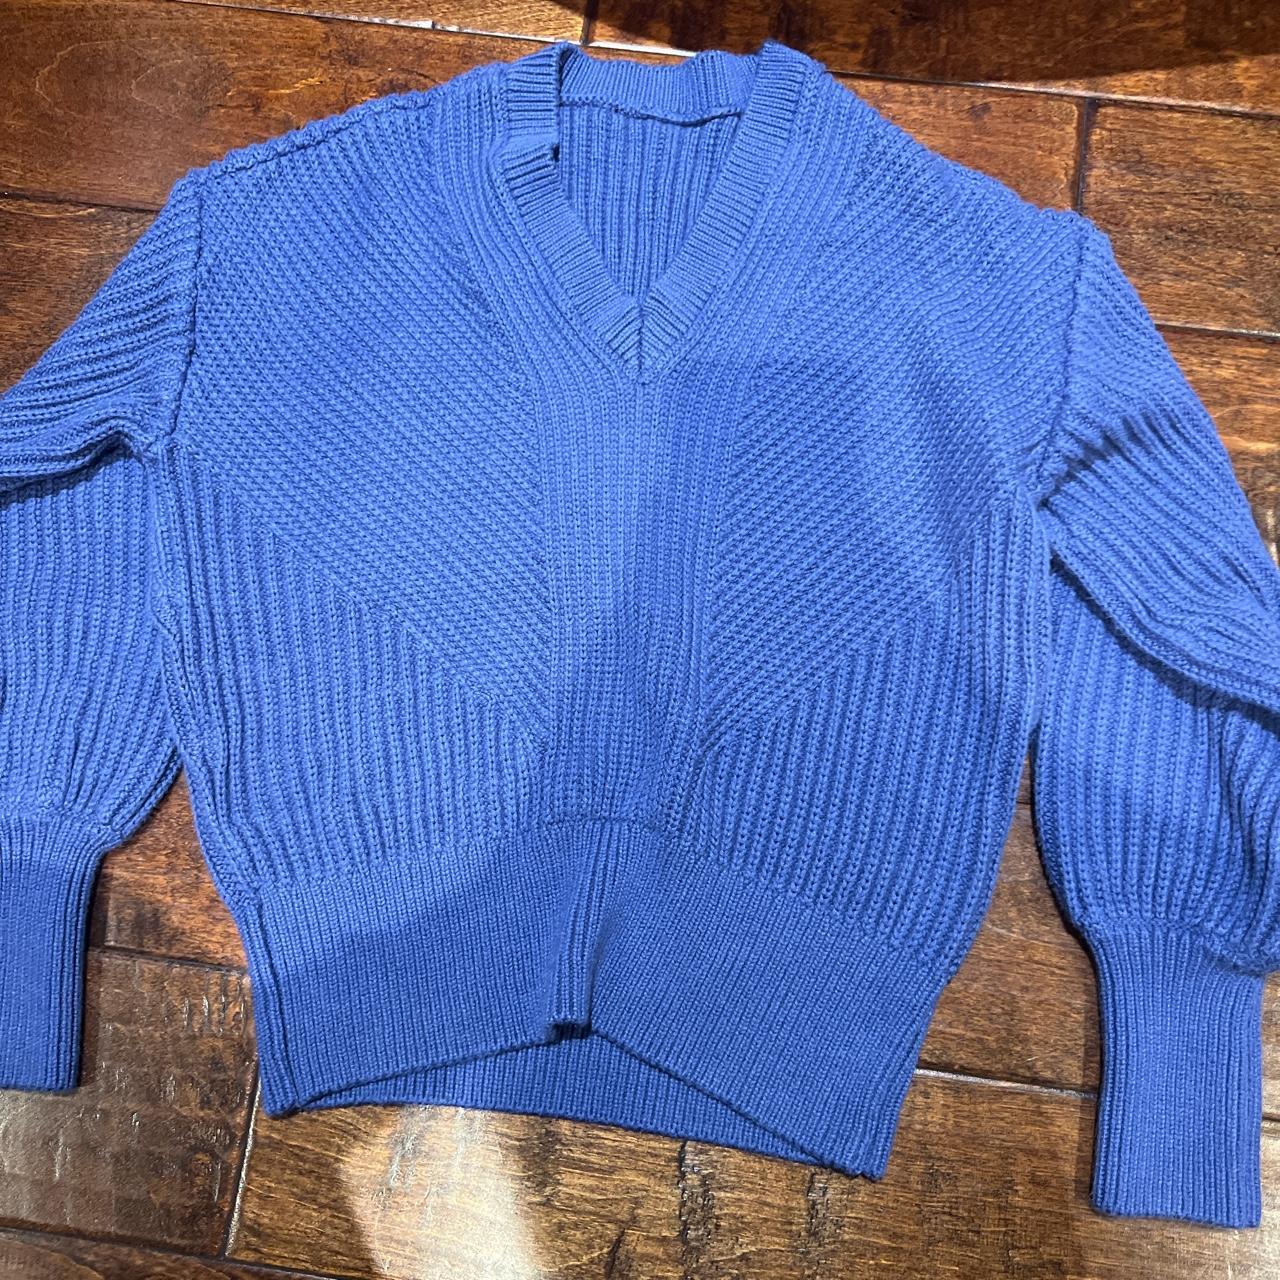 Royal blue sweater - Depop